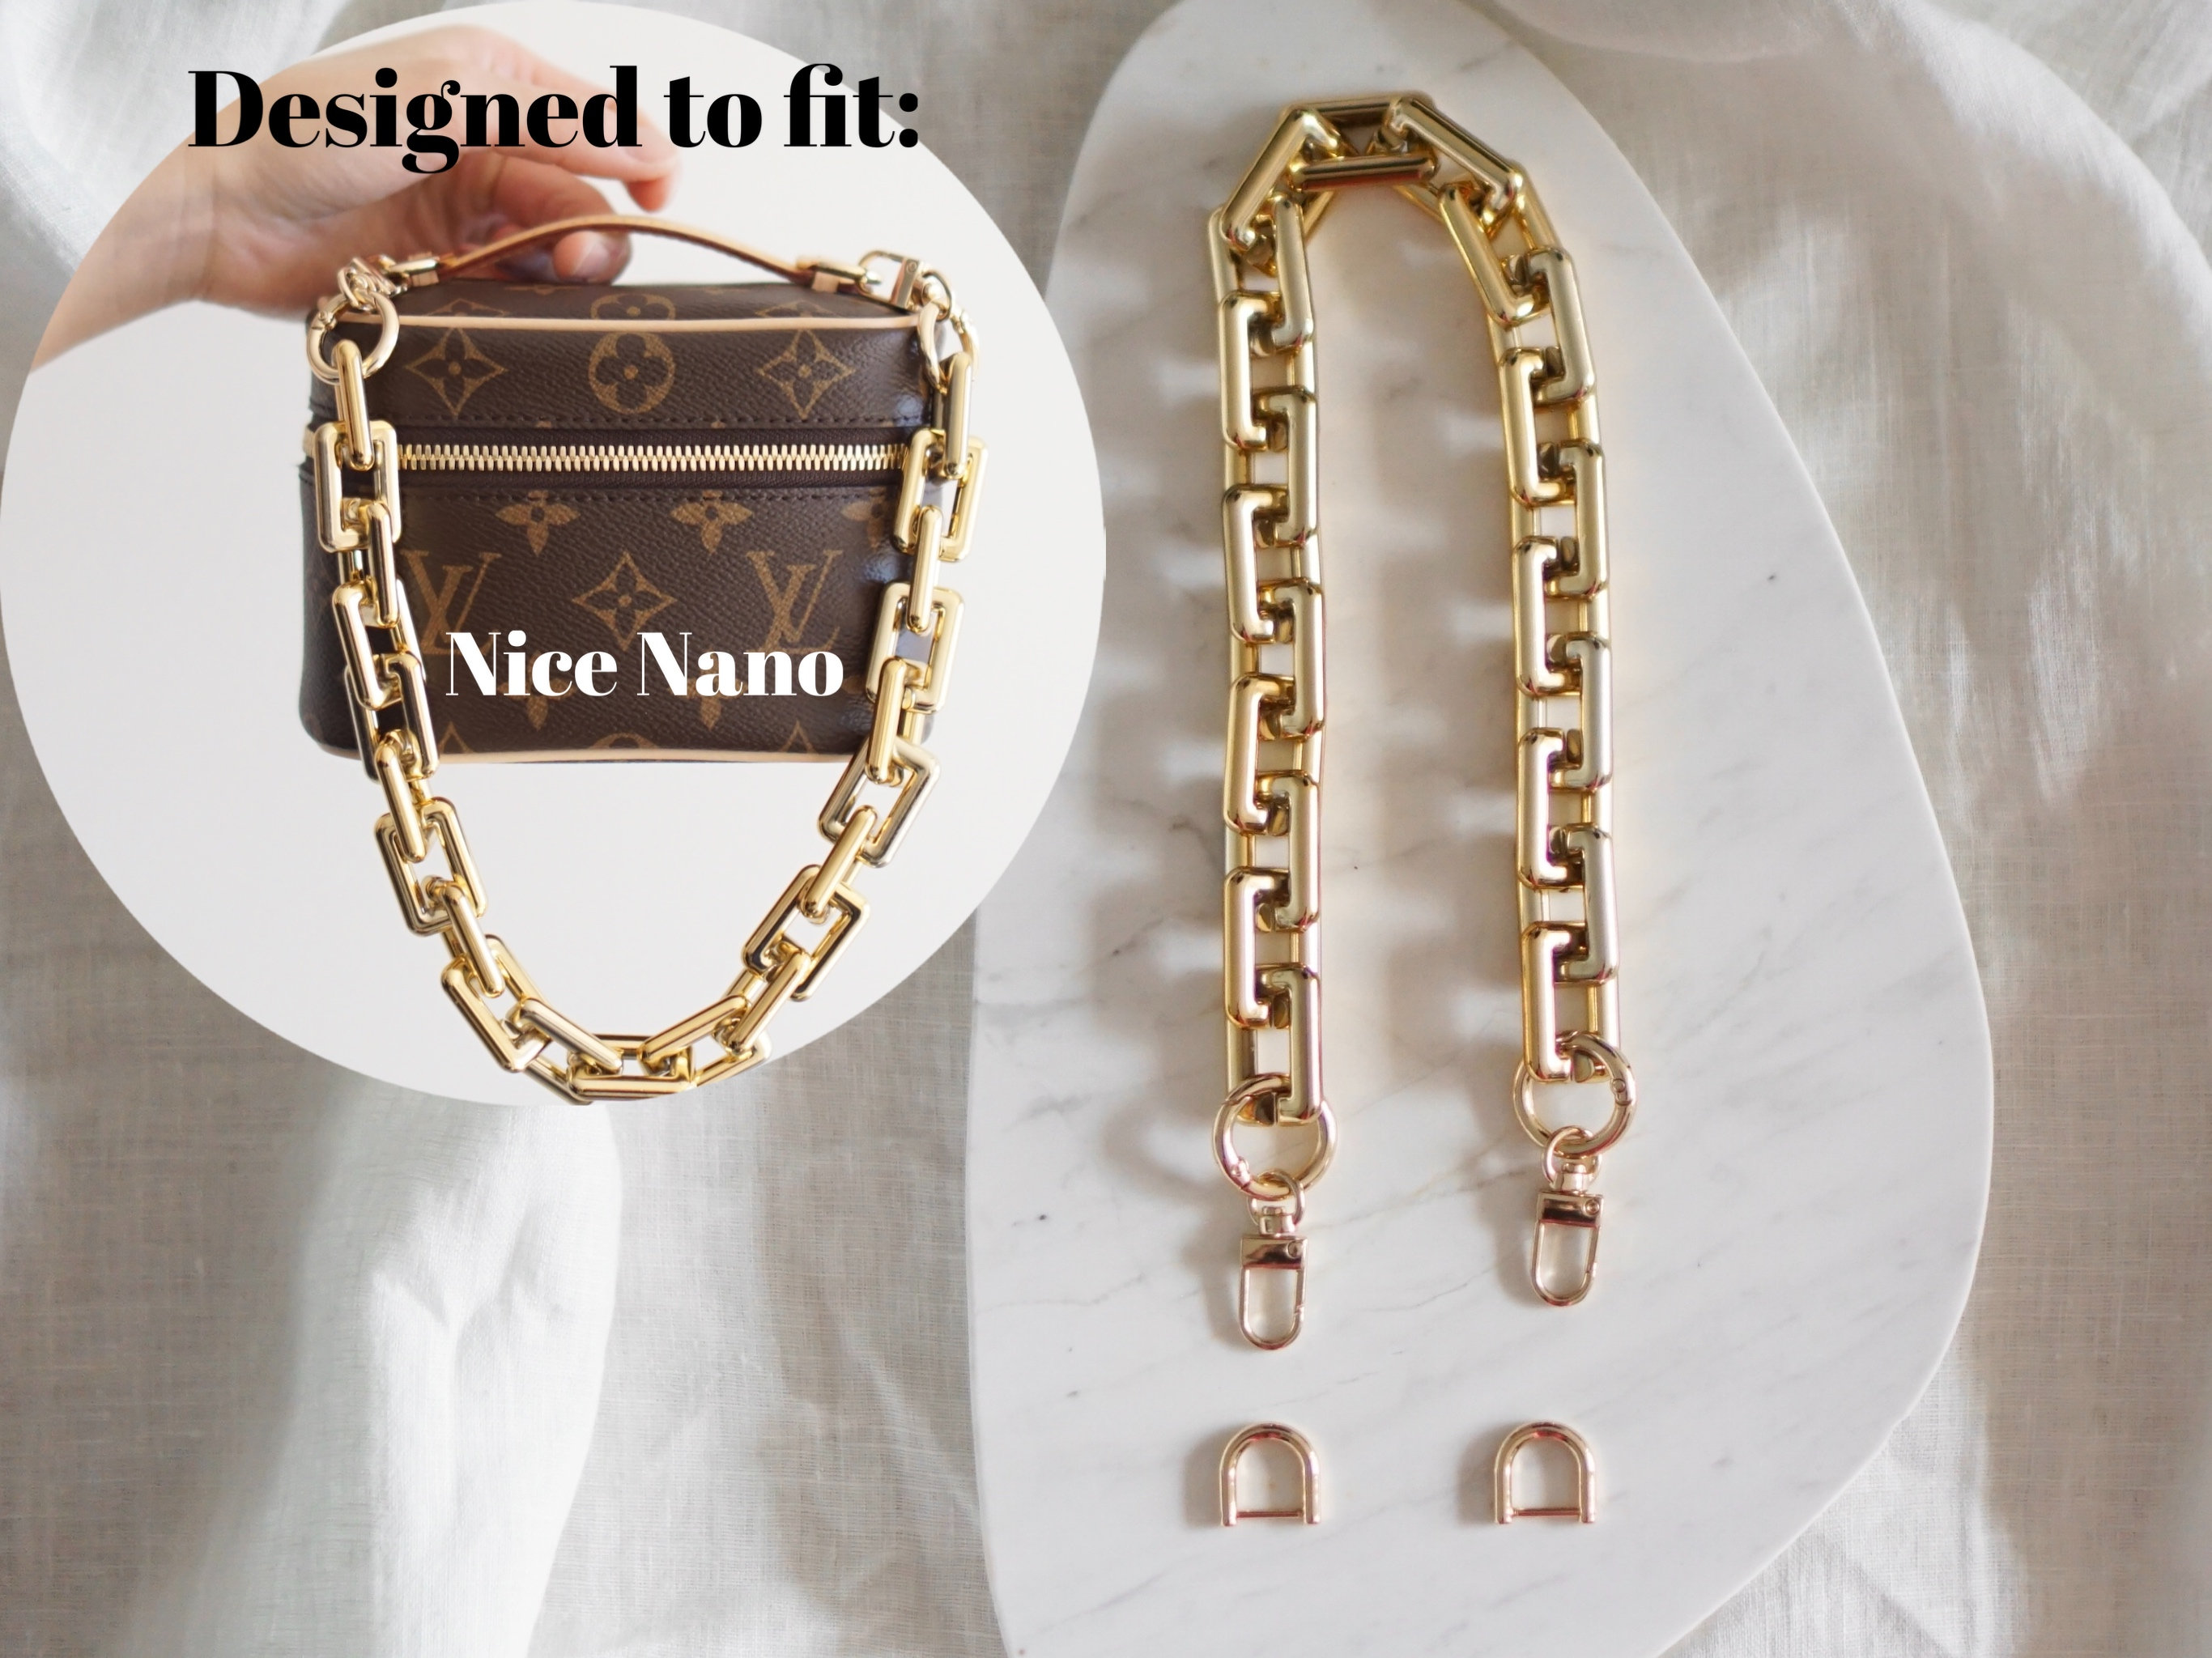 NICE Nano NICE Mini Toiletry Pouch Conversion Kit Gold Chain